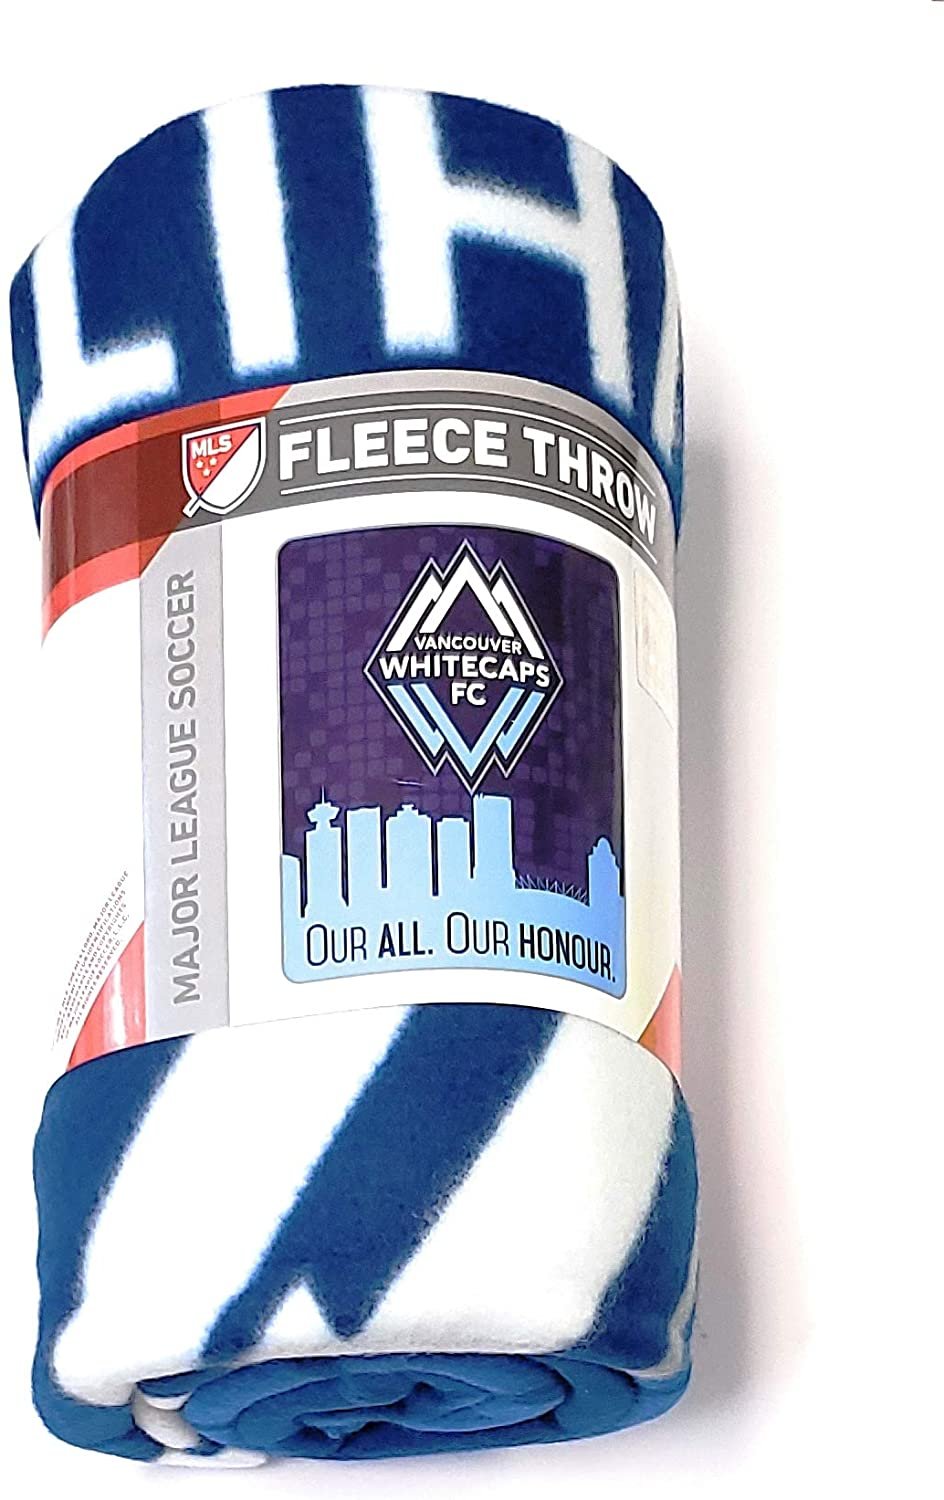 Vancouver Whitecaps FC Throw Blanket, Soft Fleece, 50x60 Inch, Lightweight, Skyline Design, MLS Soccer